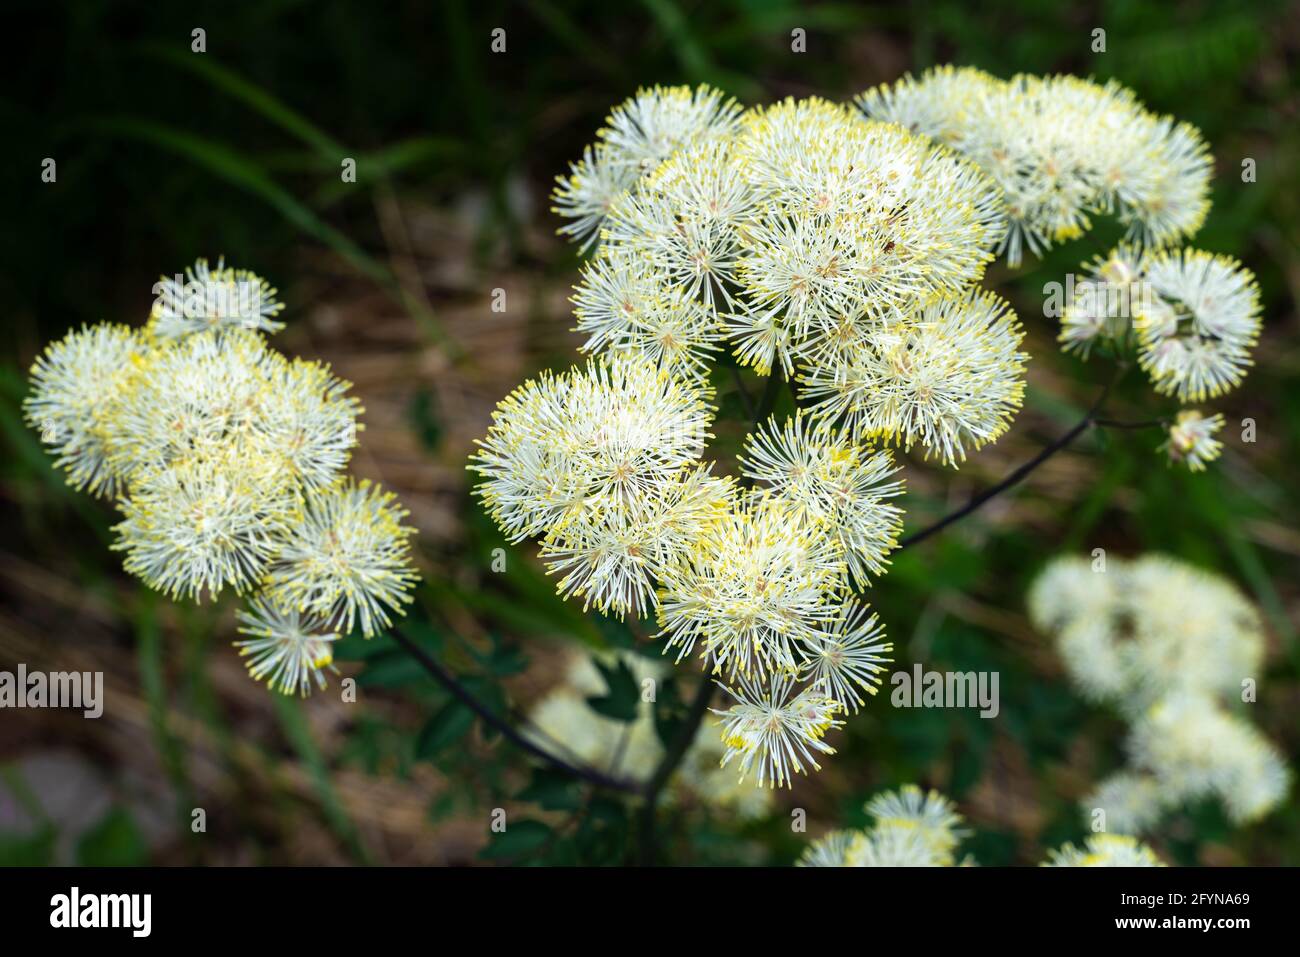 Columbine Meadow-rue or French meadow-rue bush, Thalictrum aquilegiifolium L., in flower. Abruzzo, Italy, europe Stock Photo